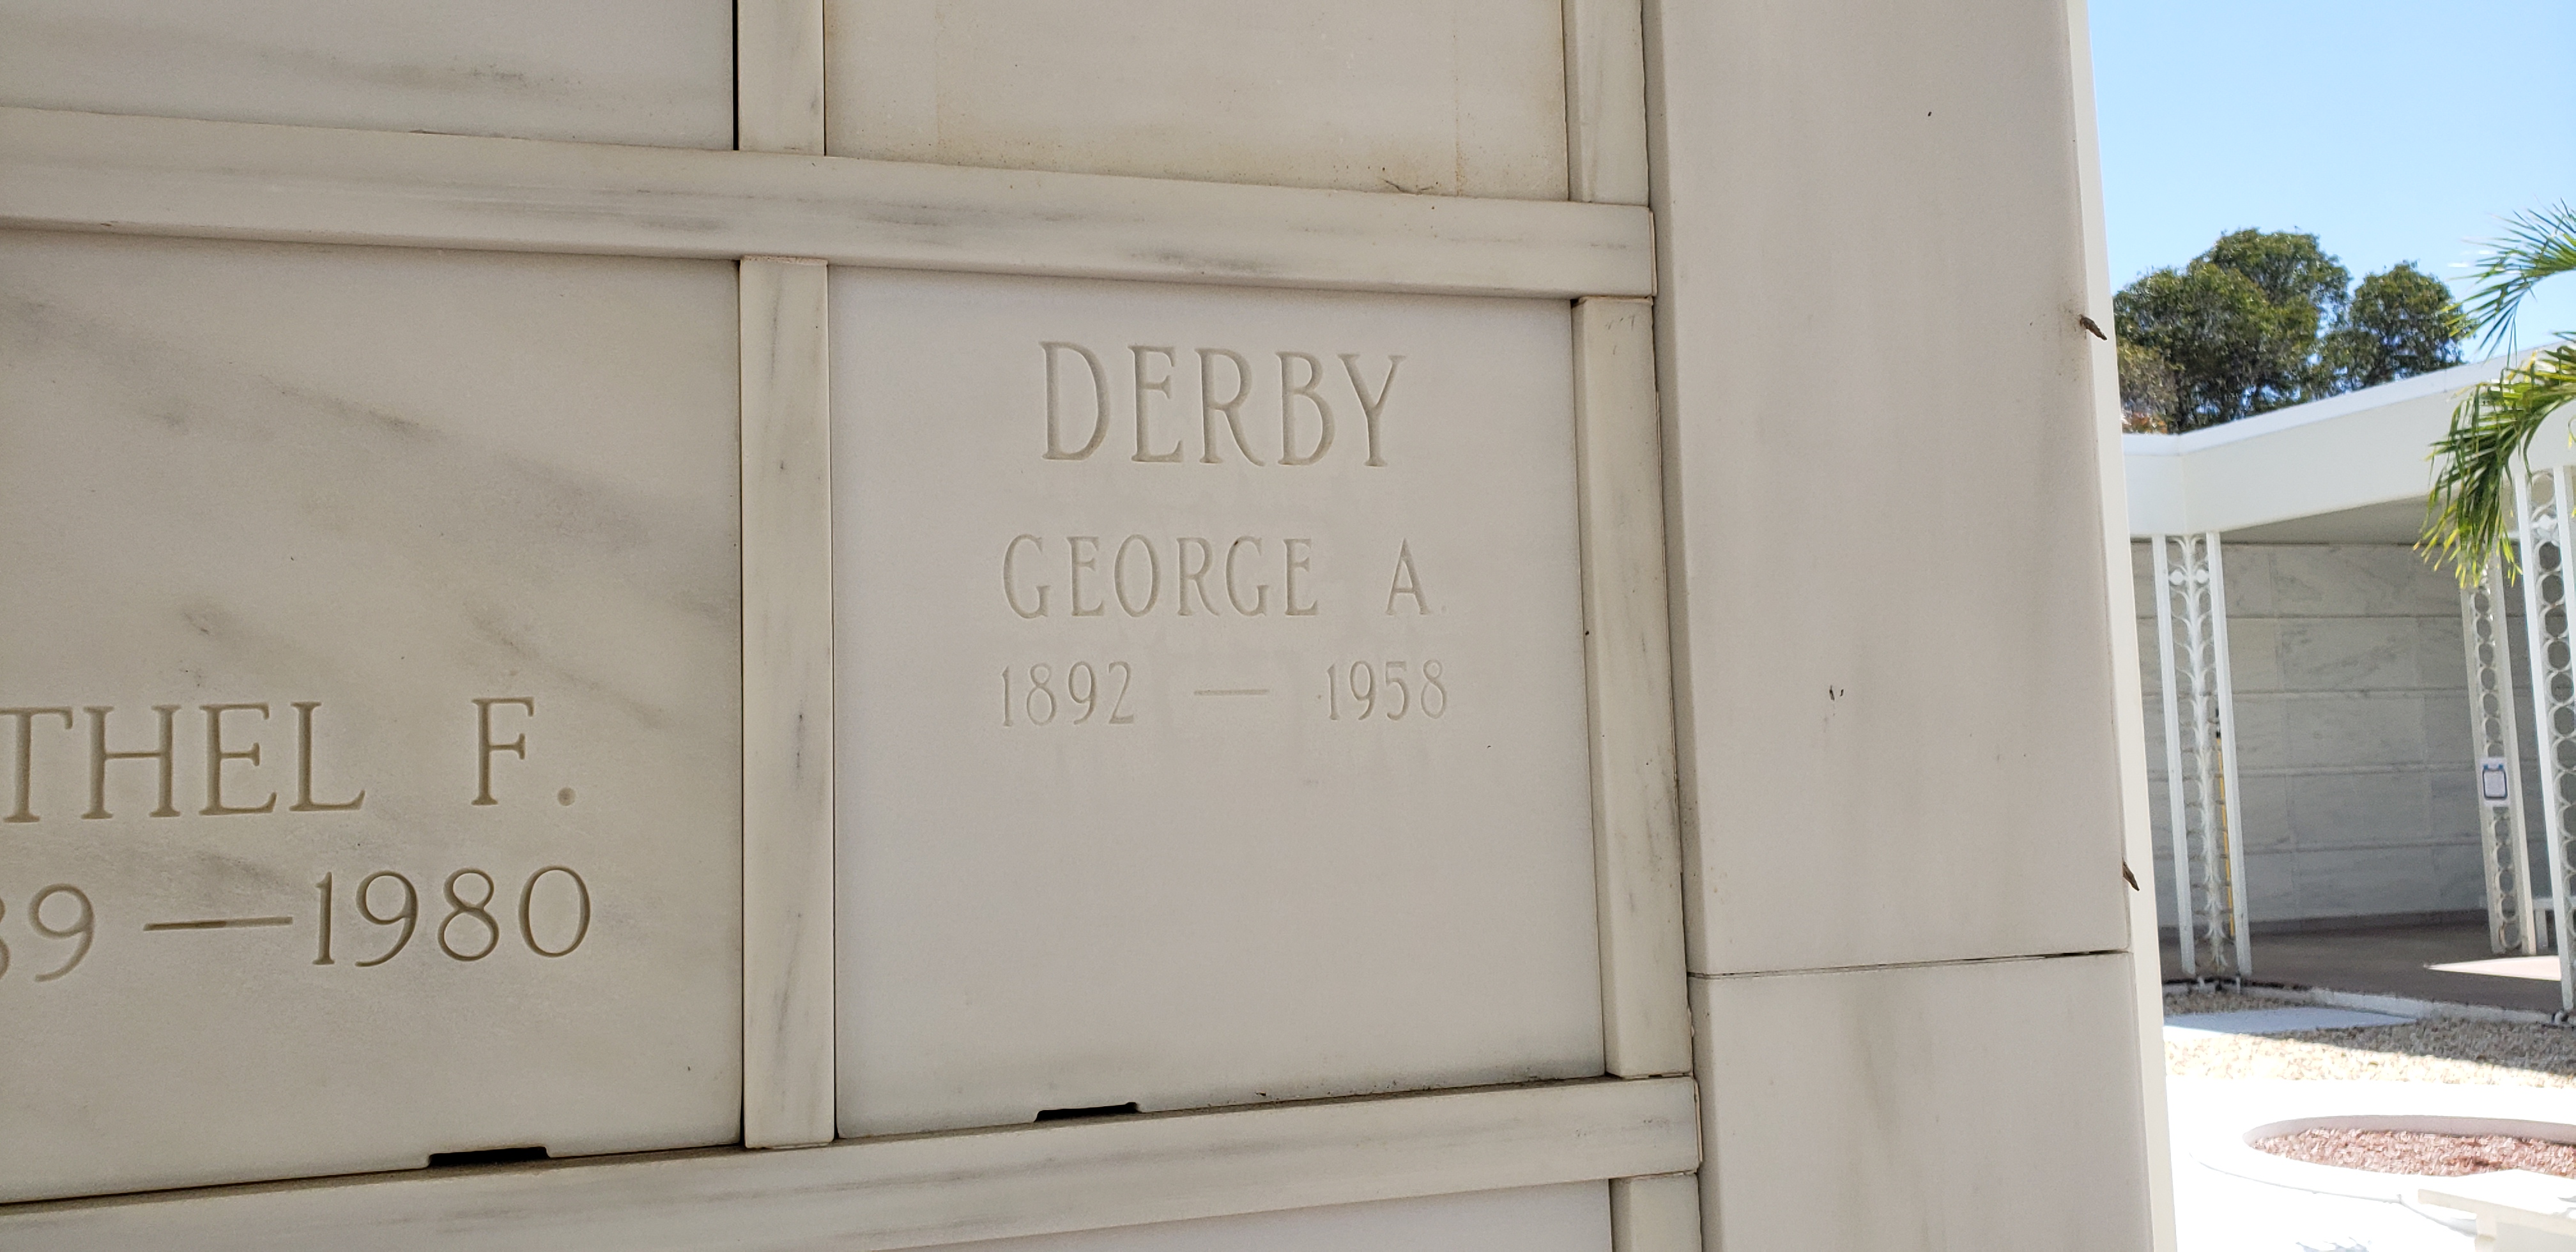 George A Derby